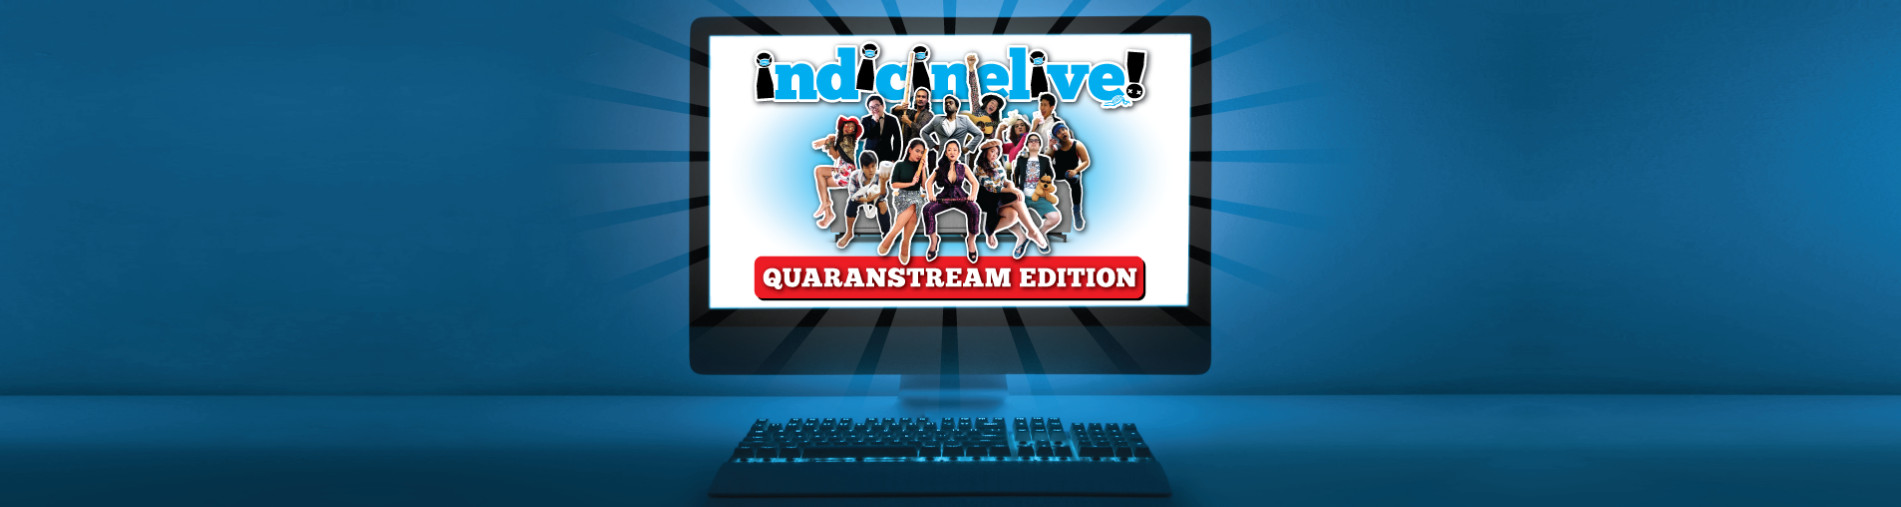 indicinelive! Quaranstream Edition (Online Premiere 12 June 9pm)